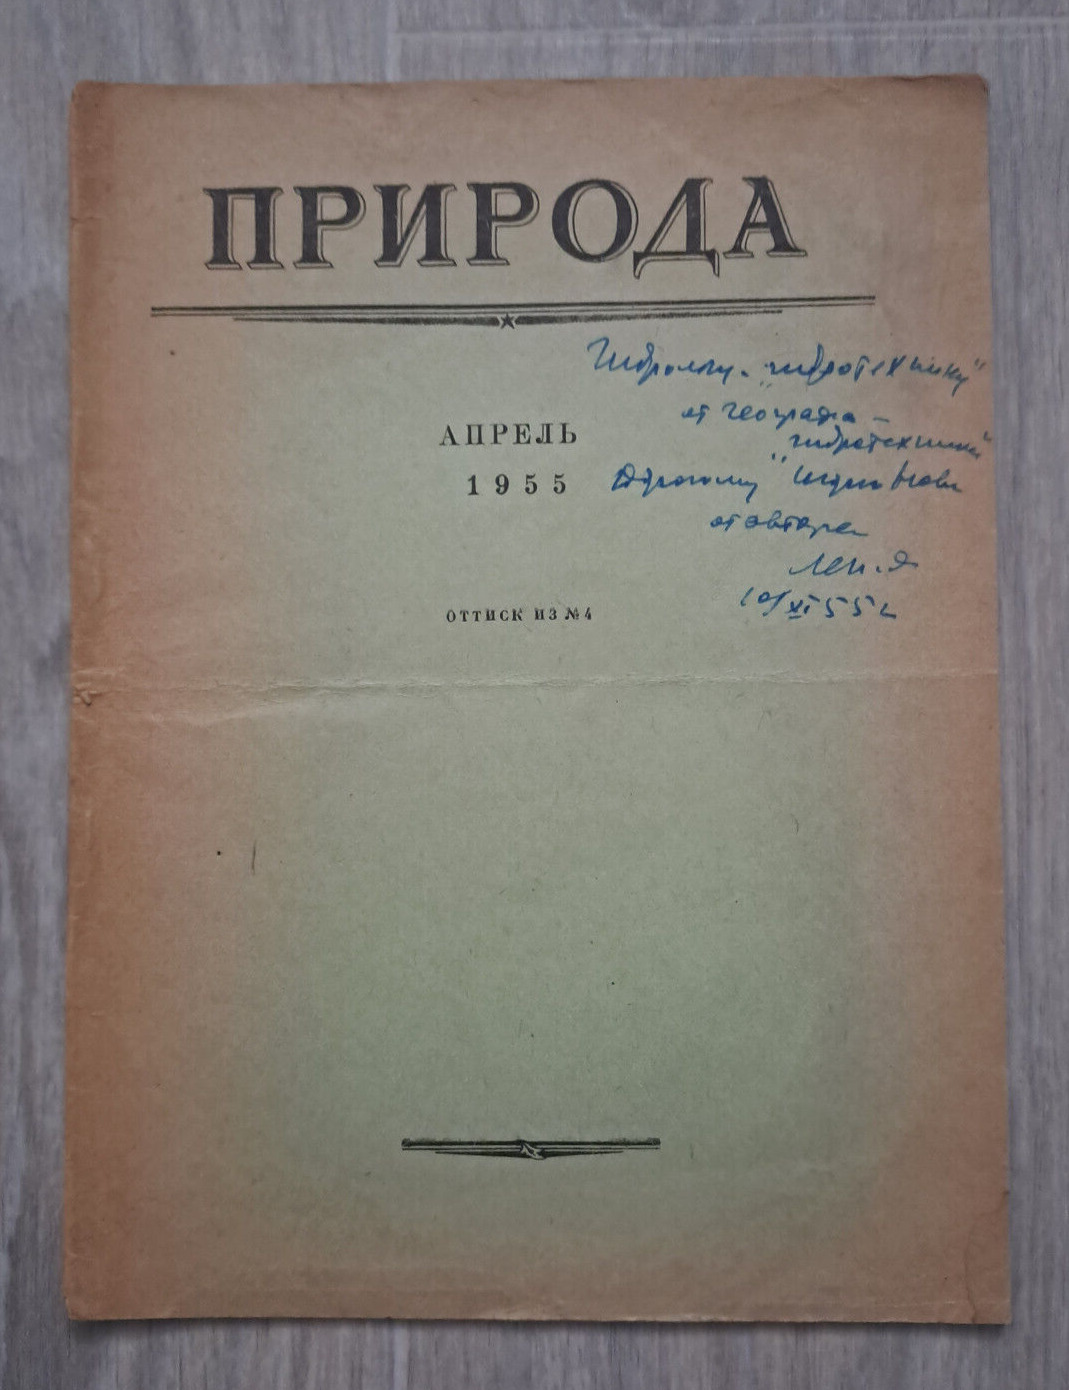 1955 Kara-Kum Canal Signed by author Turkmenistan rare Russian journal magazine